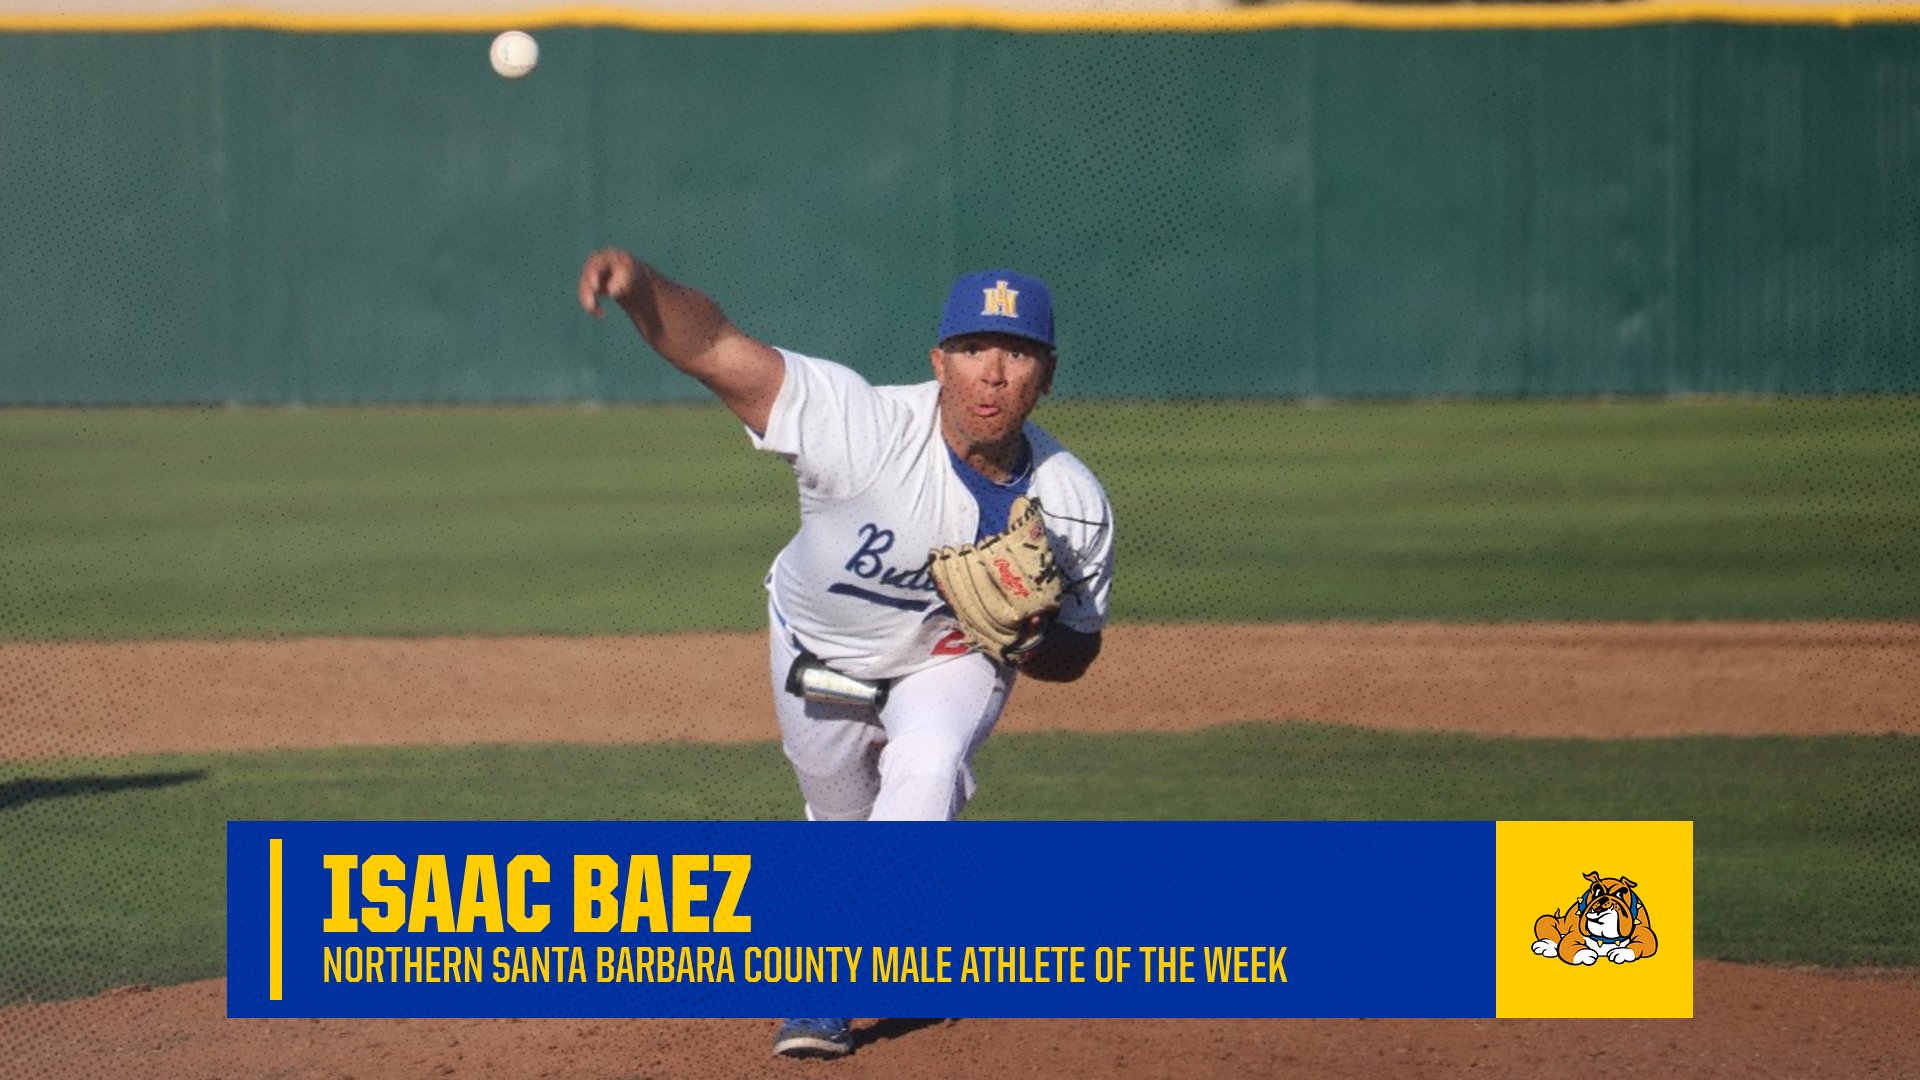 Baez Tabbed as Northern Santa Barbara County Male Athlete of the Week